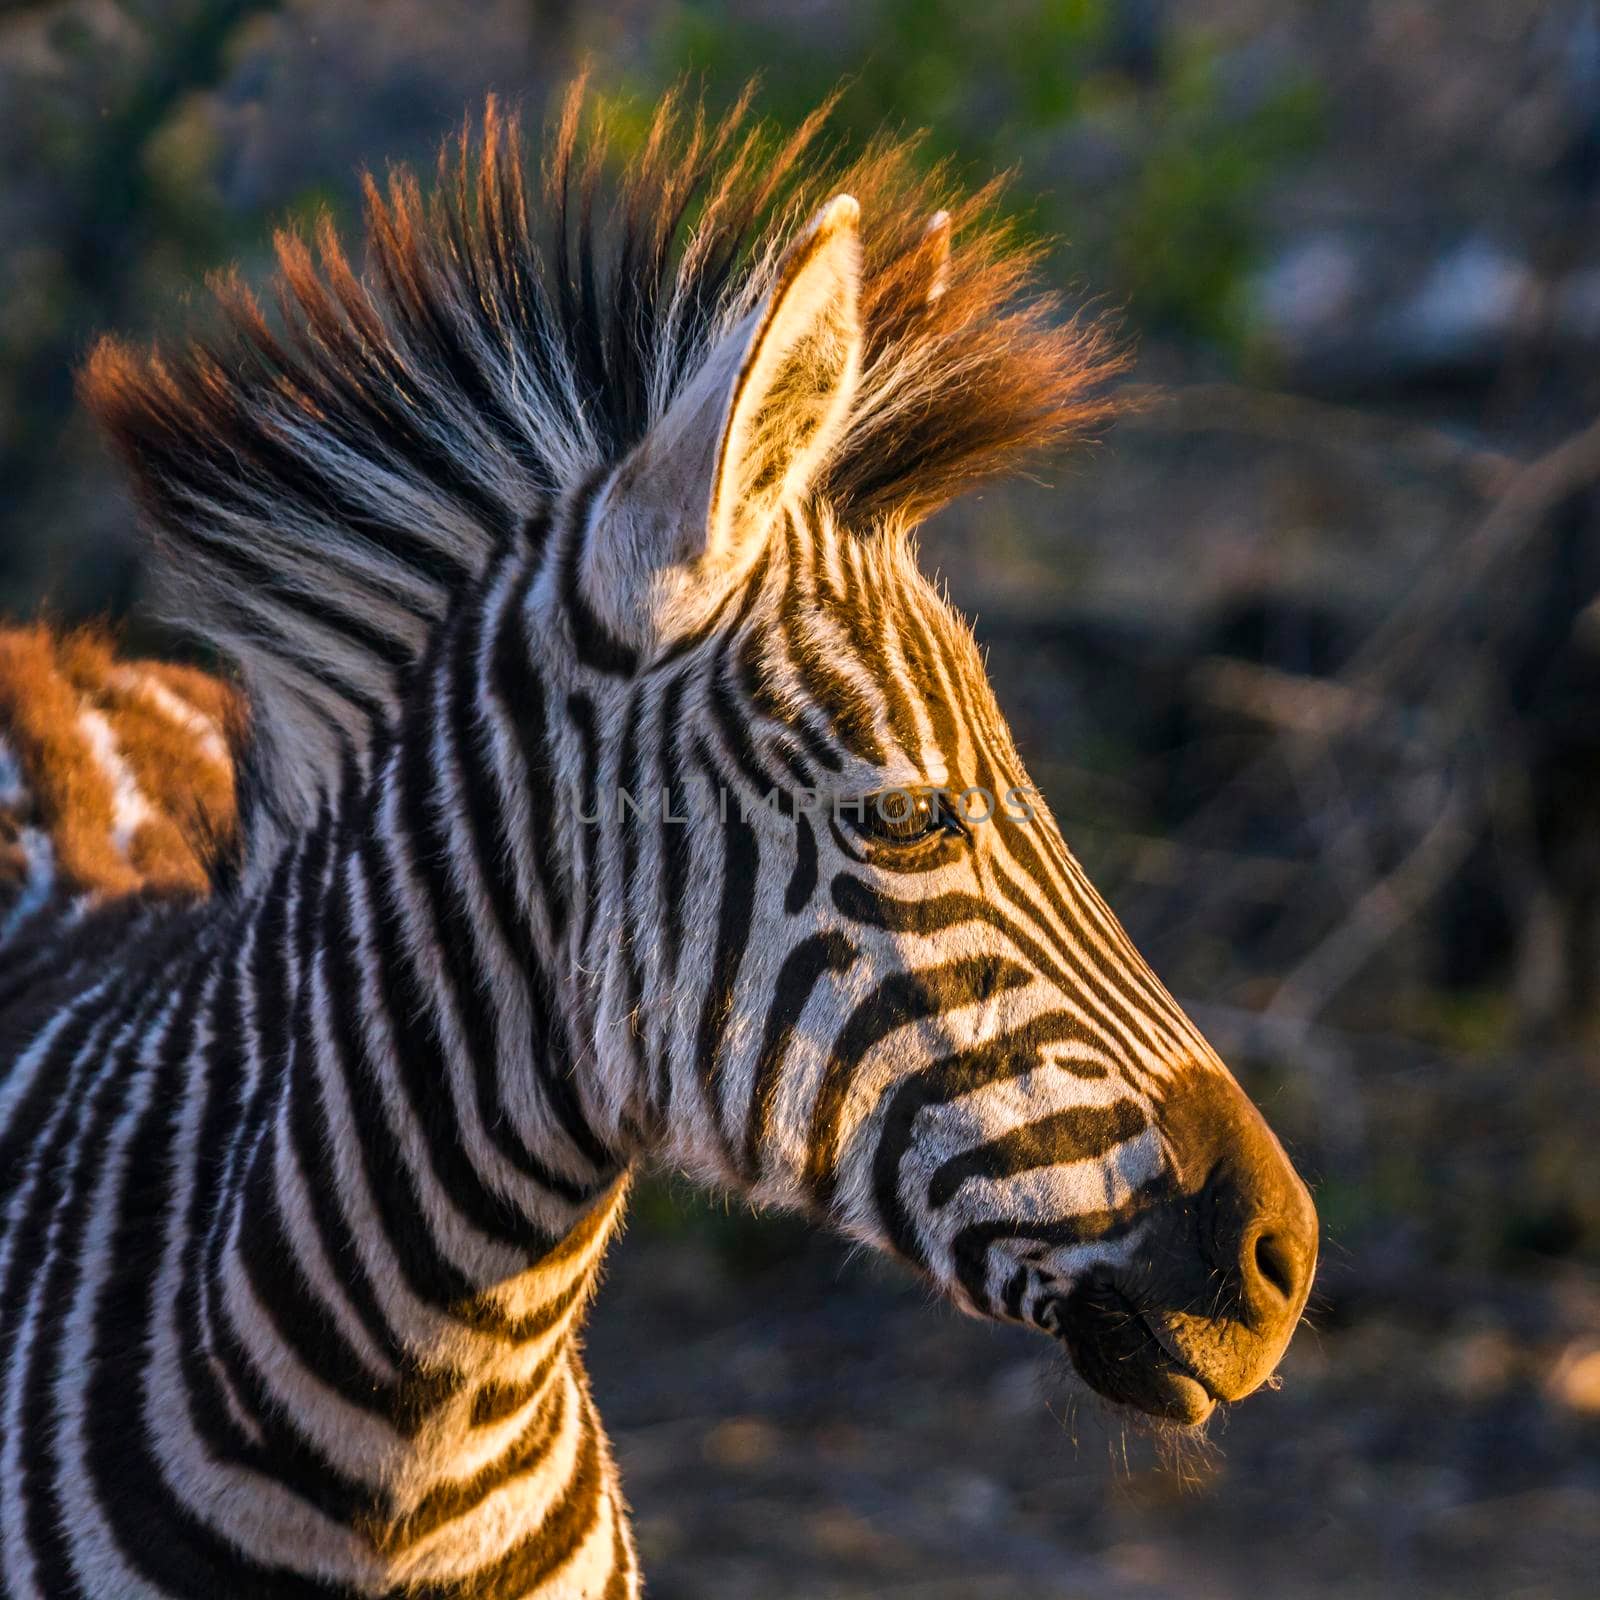 Plains zebra in Kruger National park, South Africa by PACOCOMO